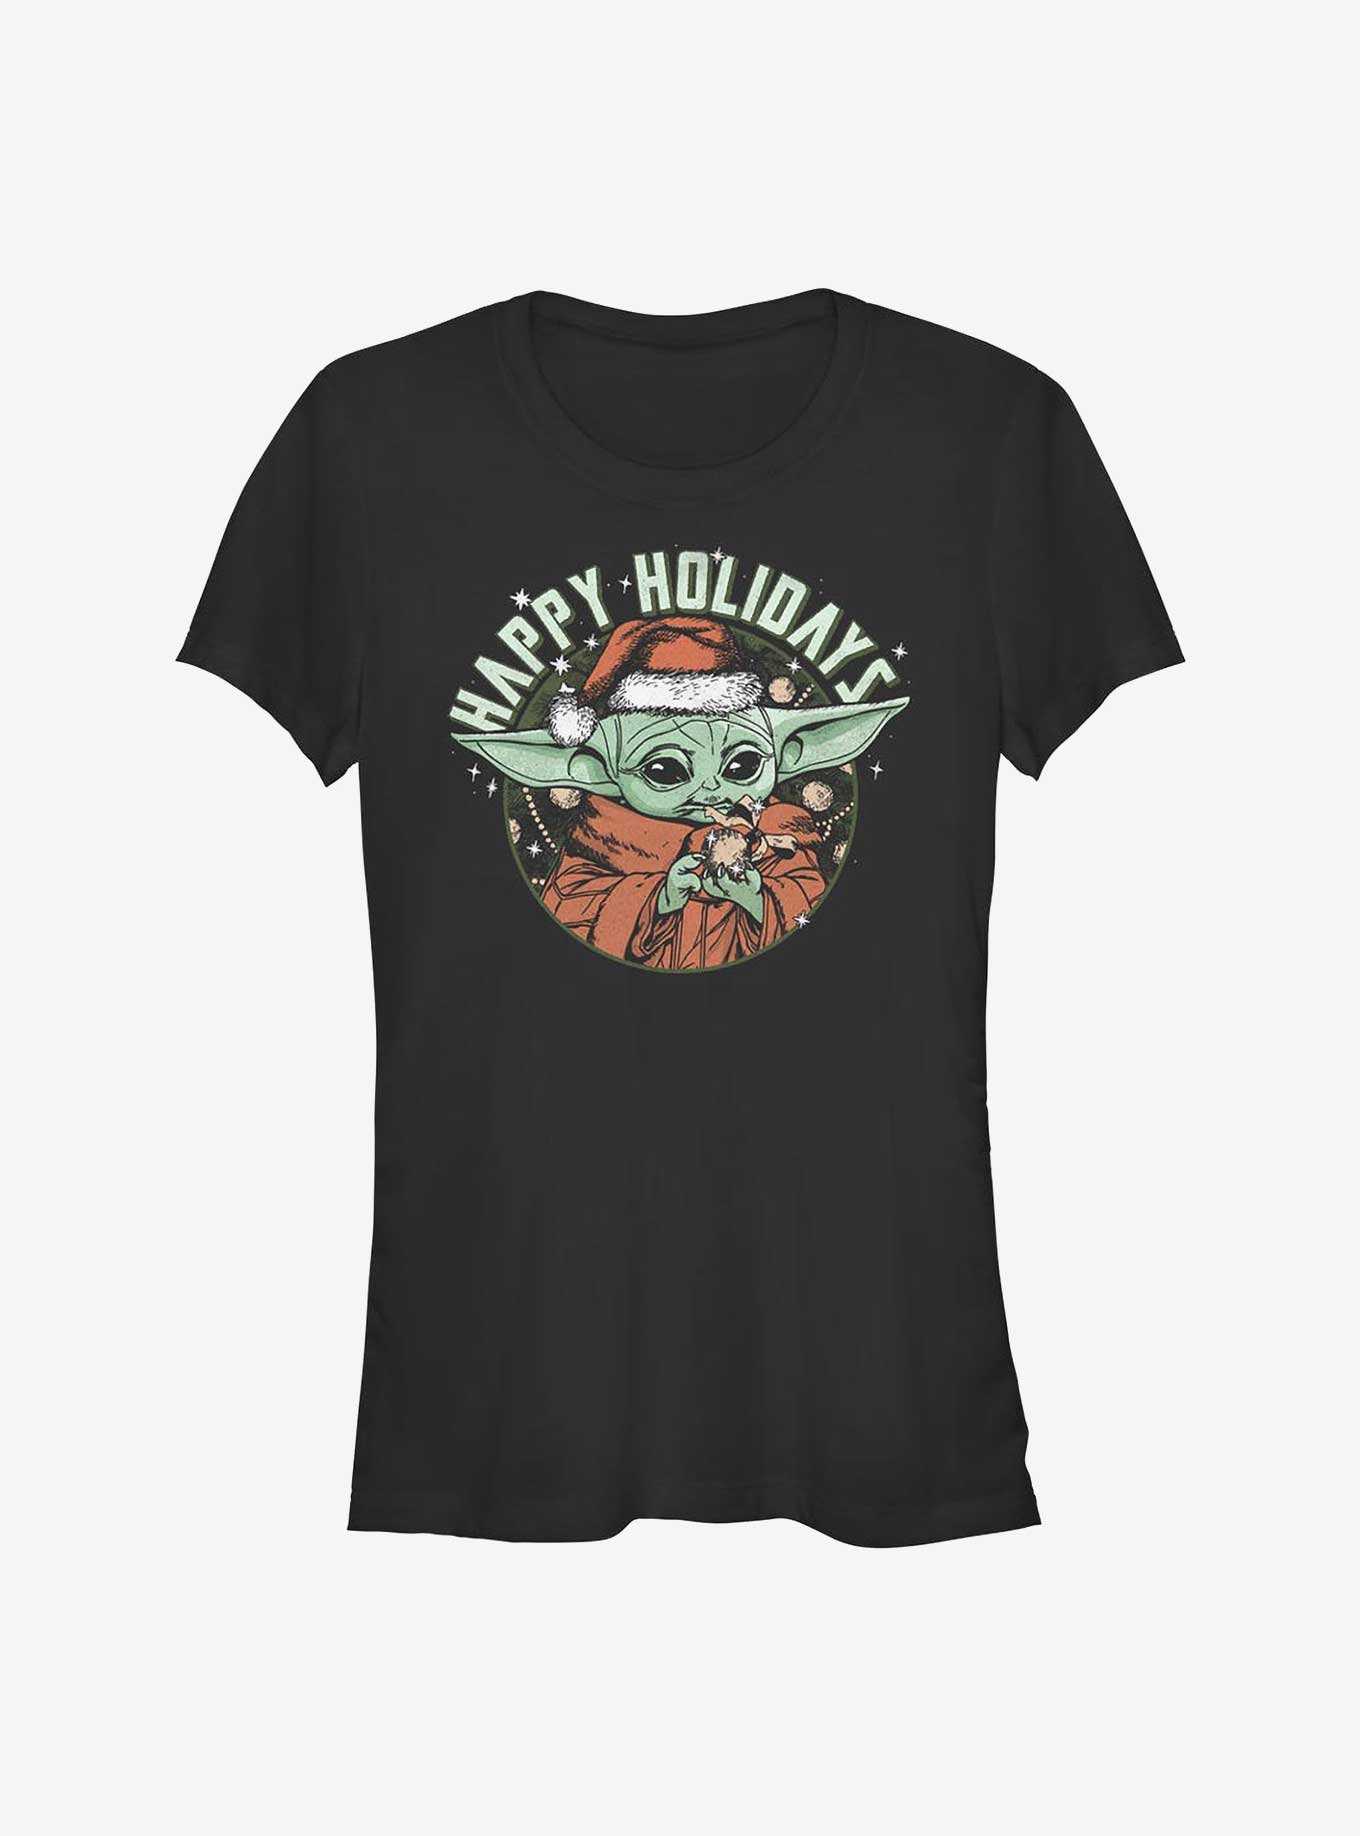 Star Wars The Mandalorian The Child Holidays Girls T-Shirt, , hi-res